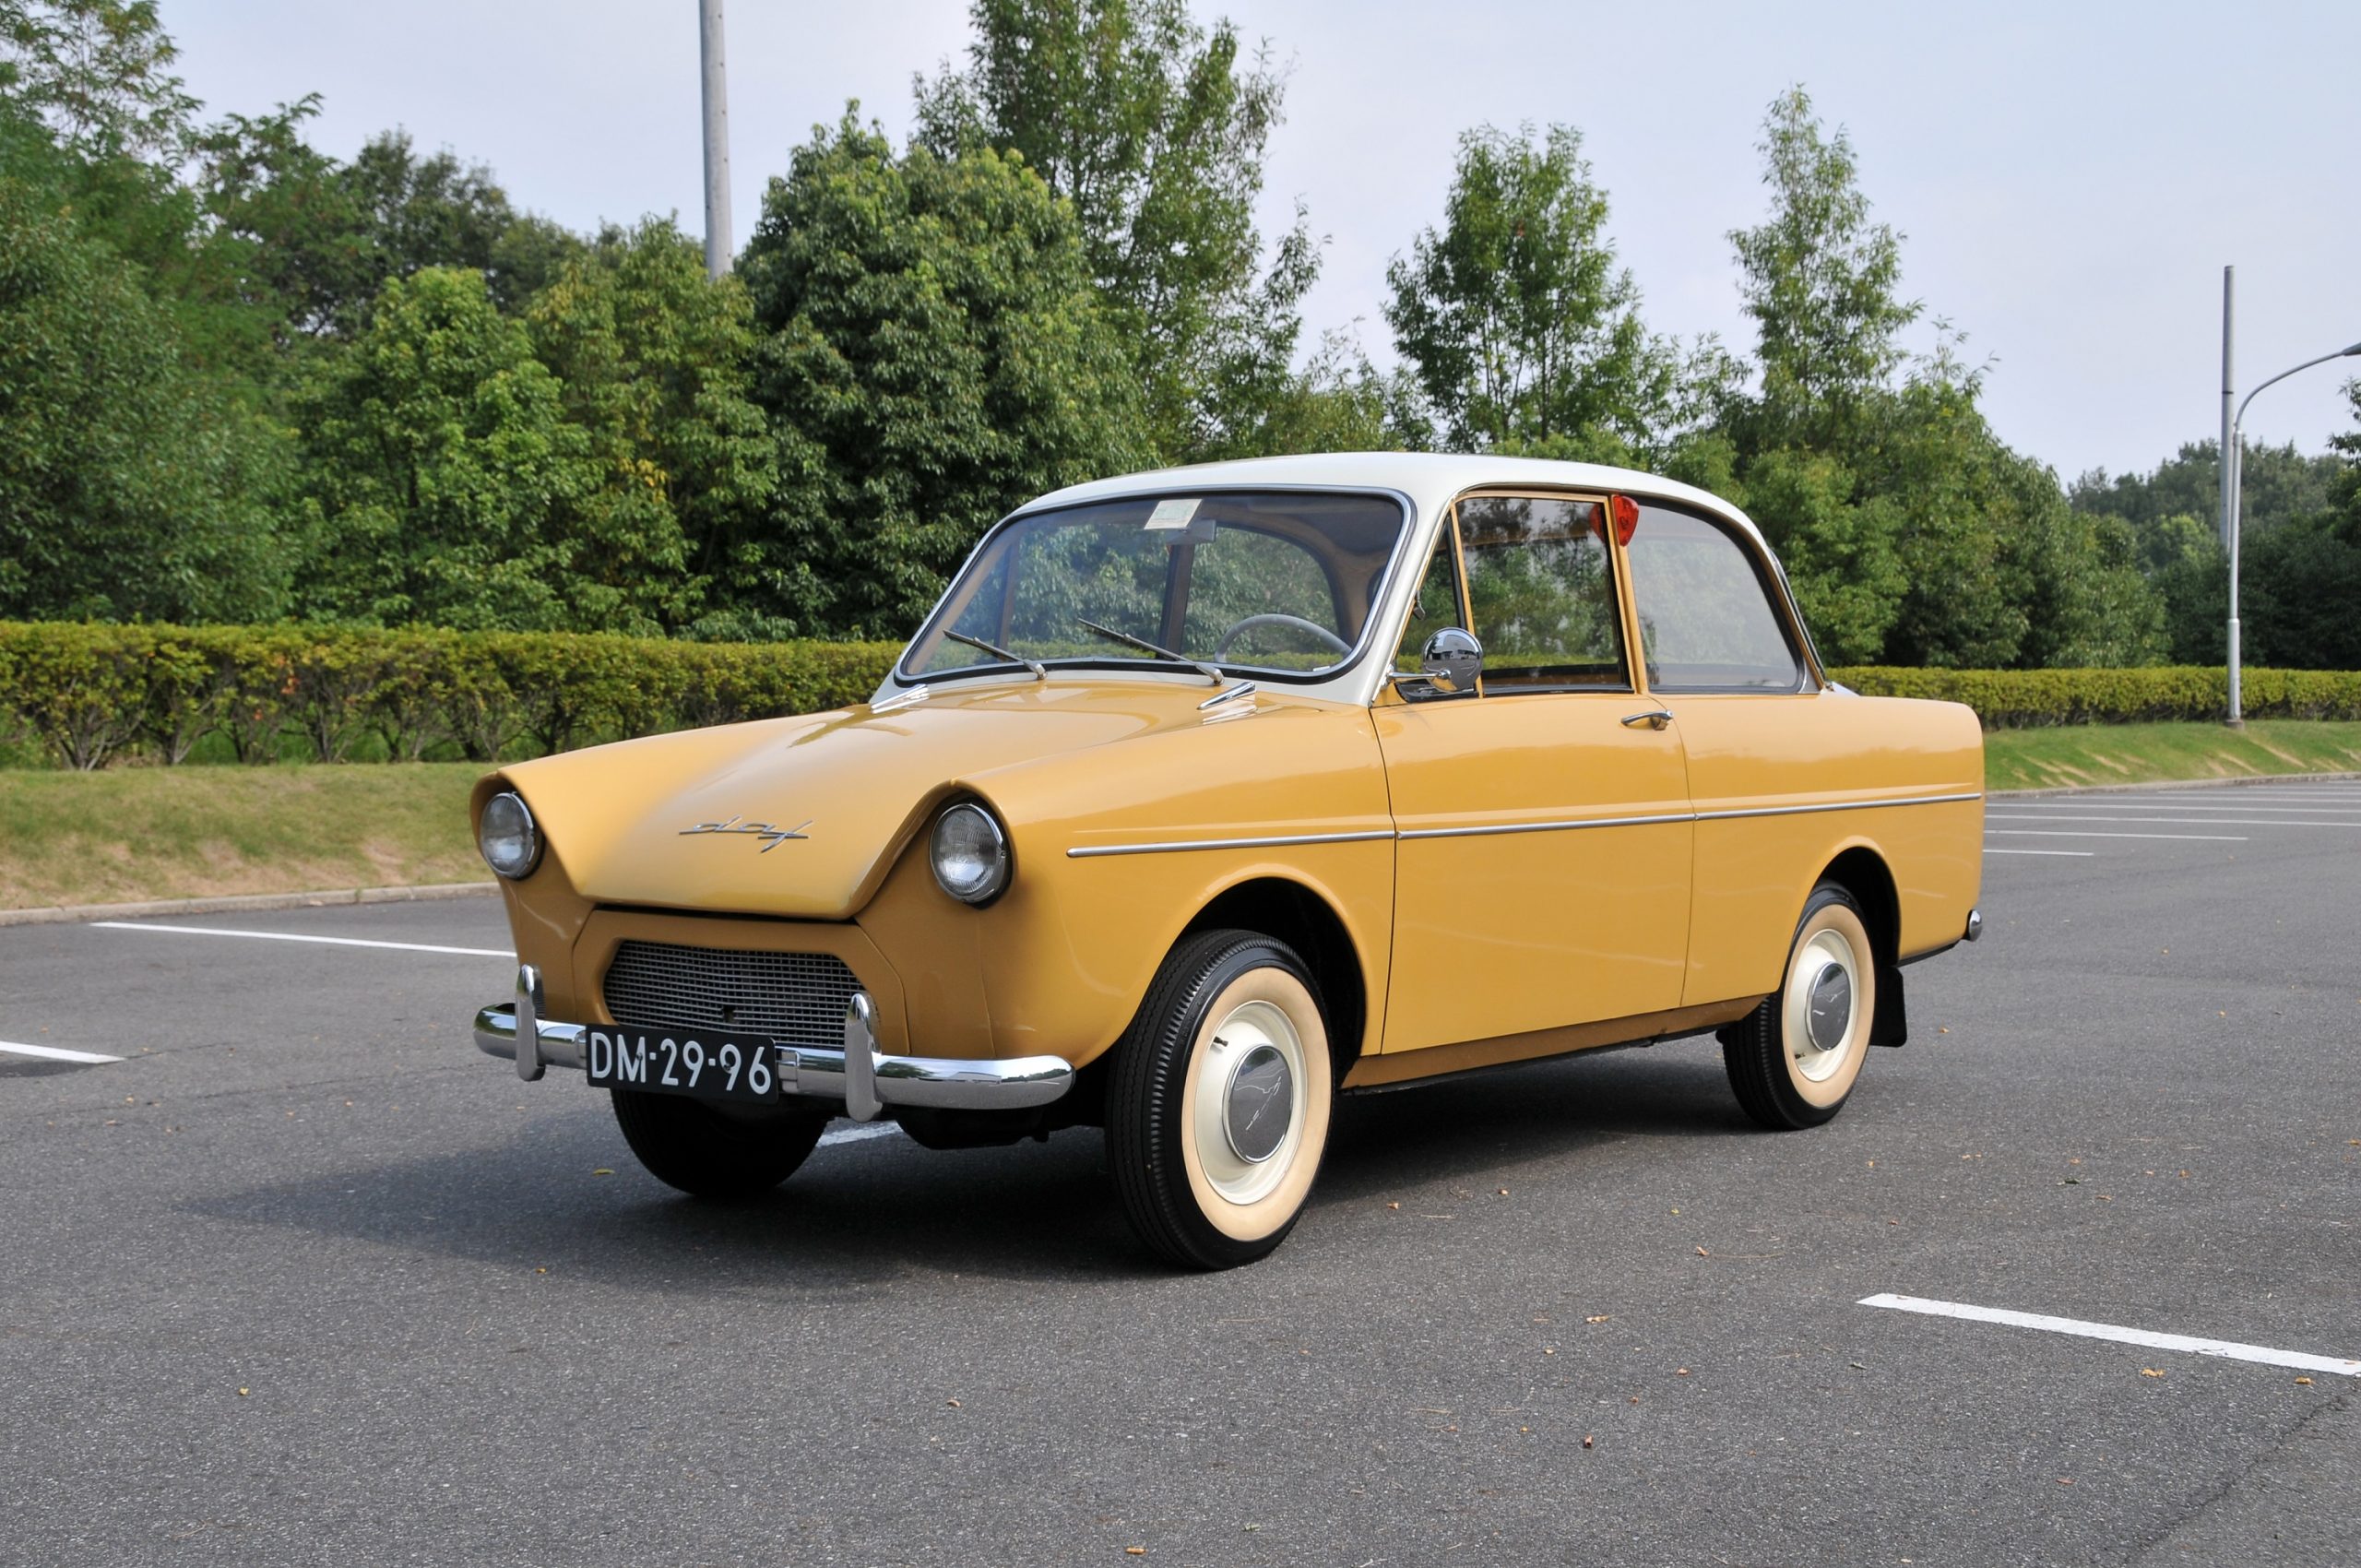 DAF 600 (1959 / Netherland)